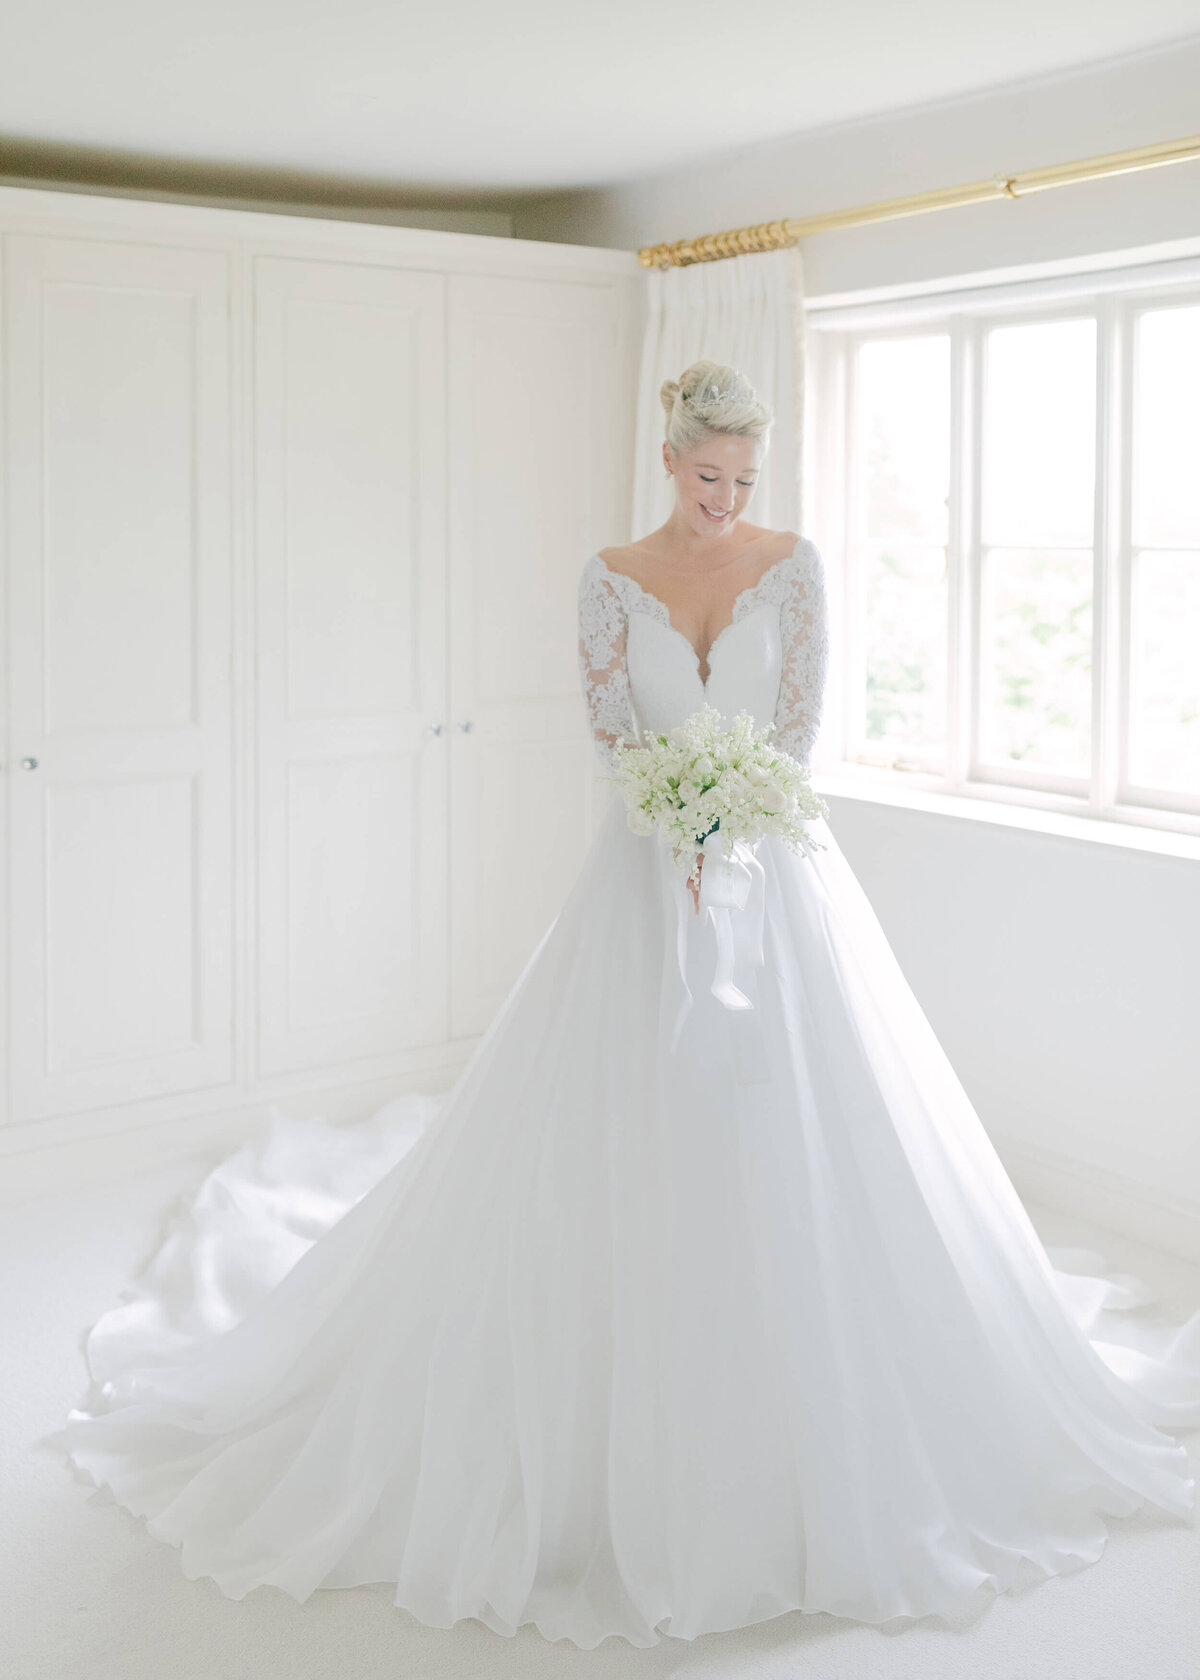 chloe-winstanley-weddings-suzanne-neville-bride-portait-bouquet